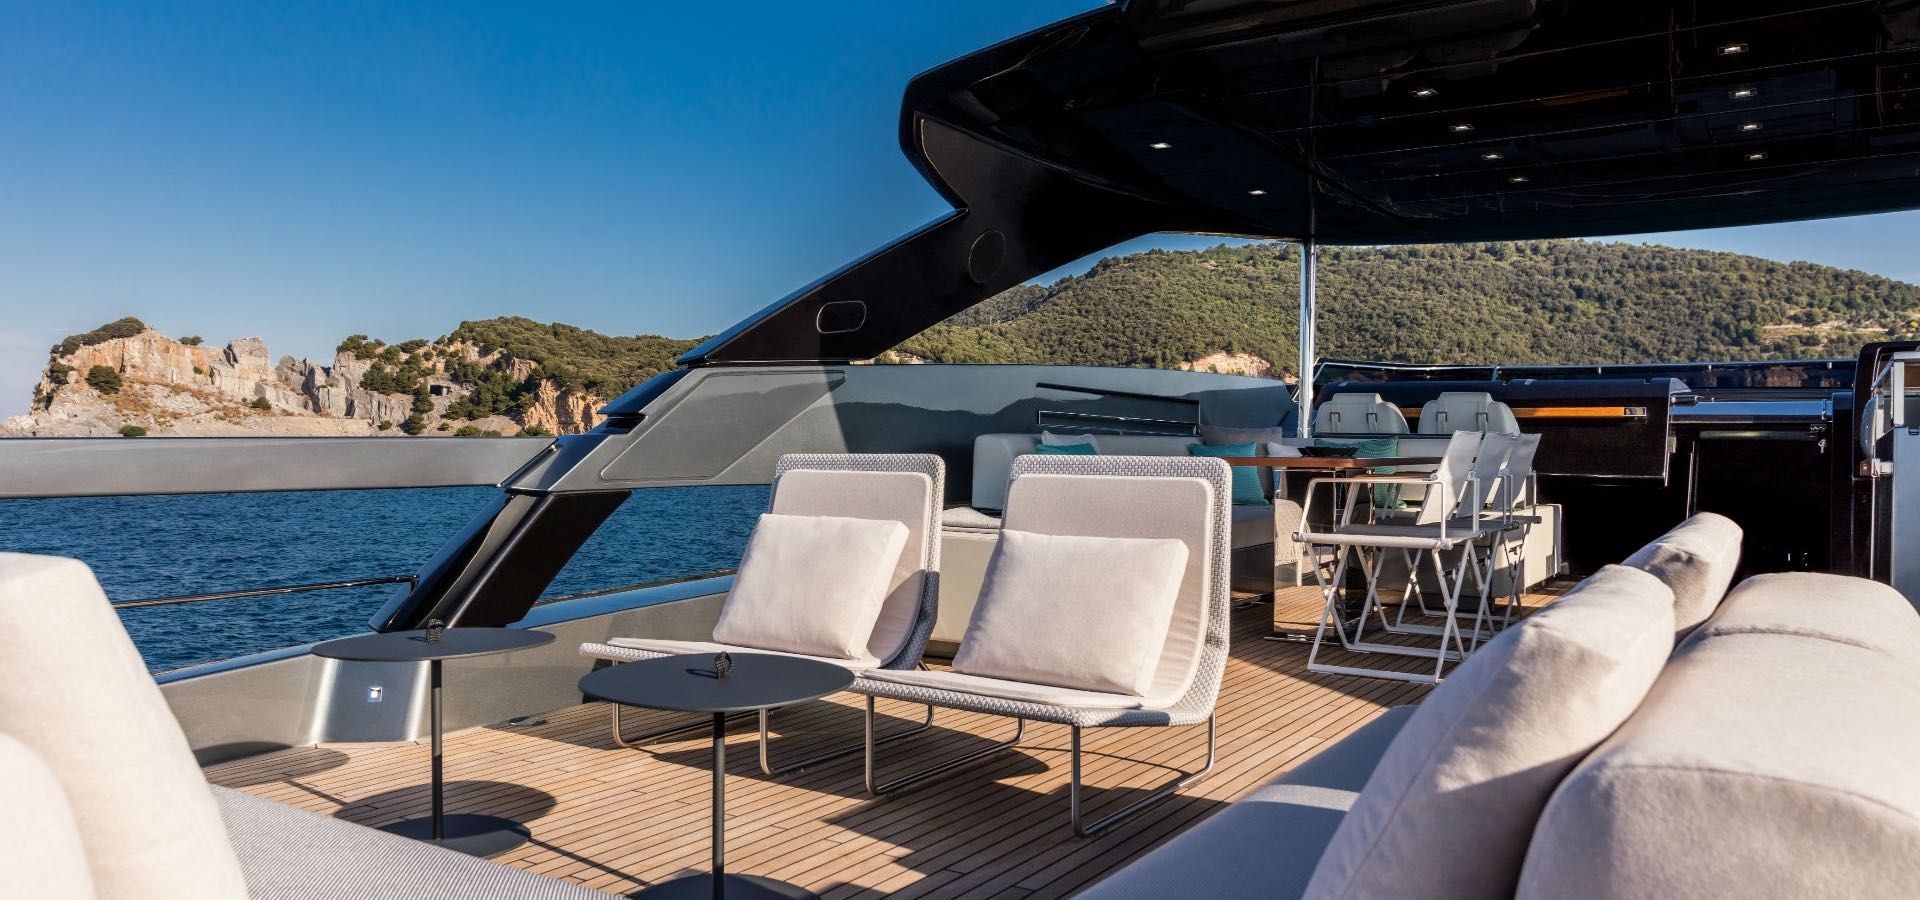 Riva 100 Luxury Super Yacht